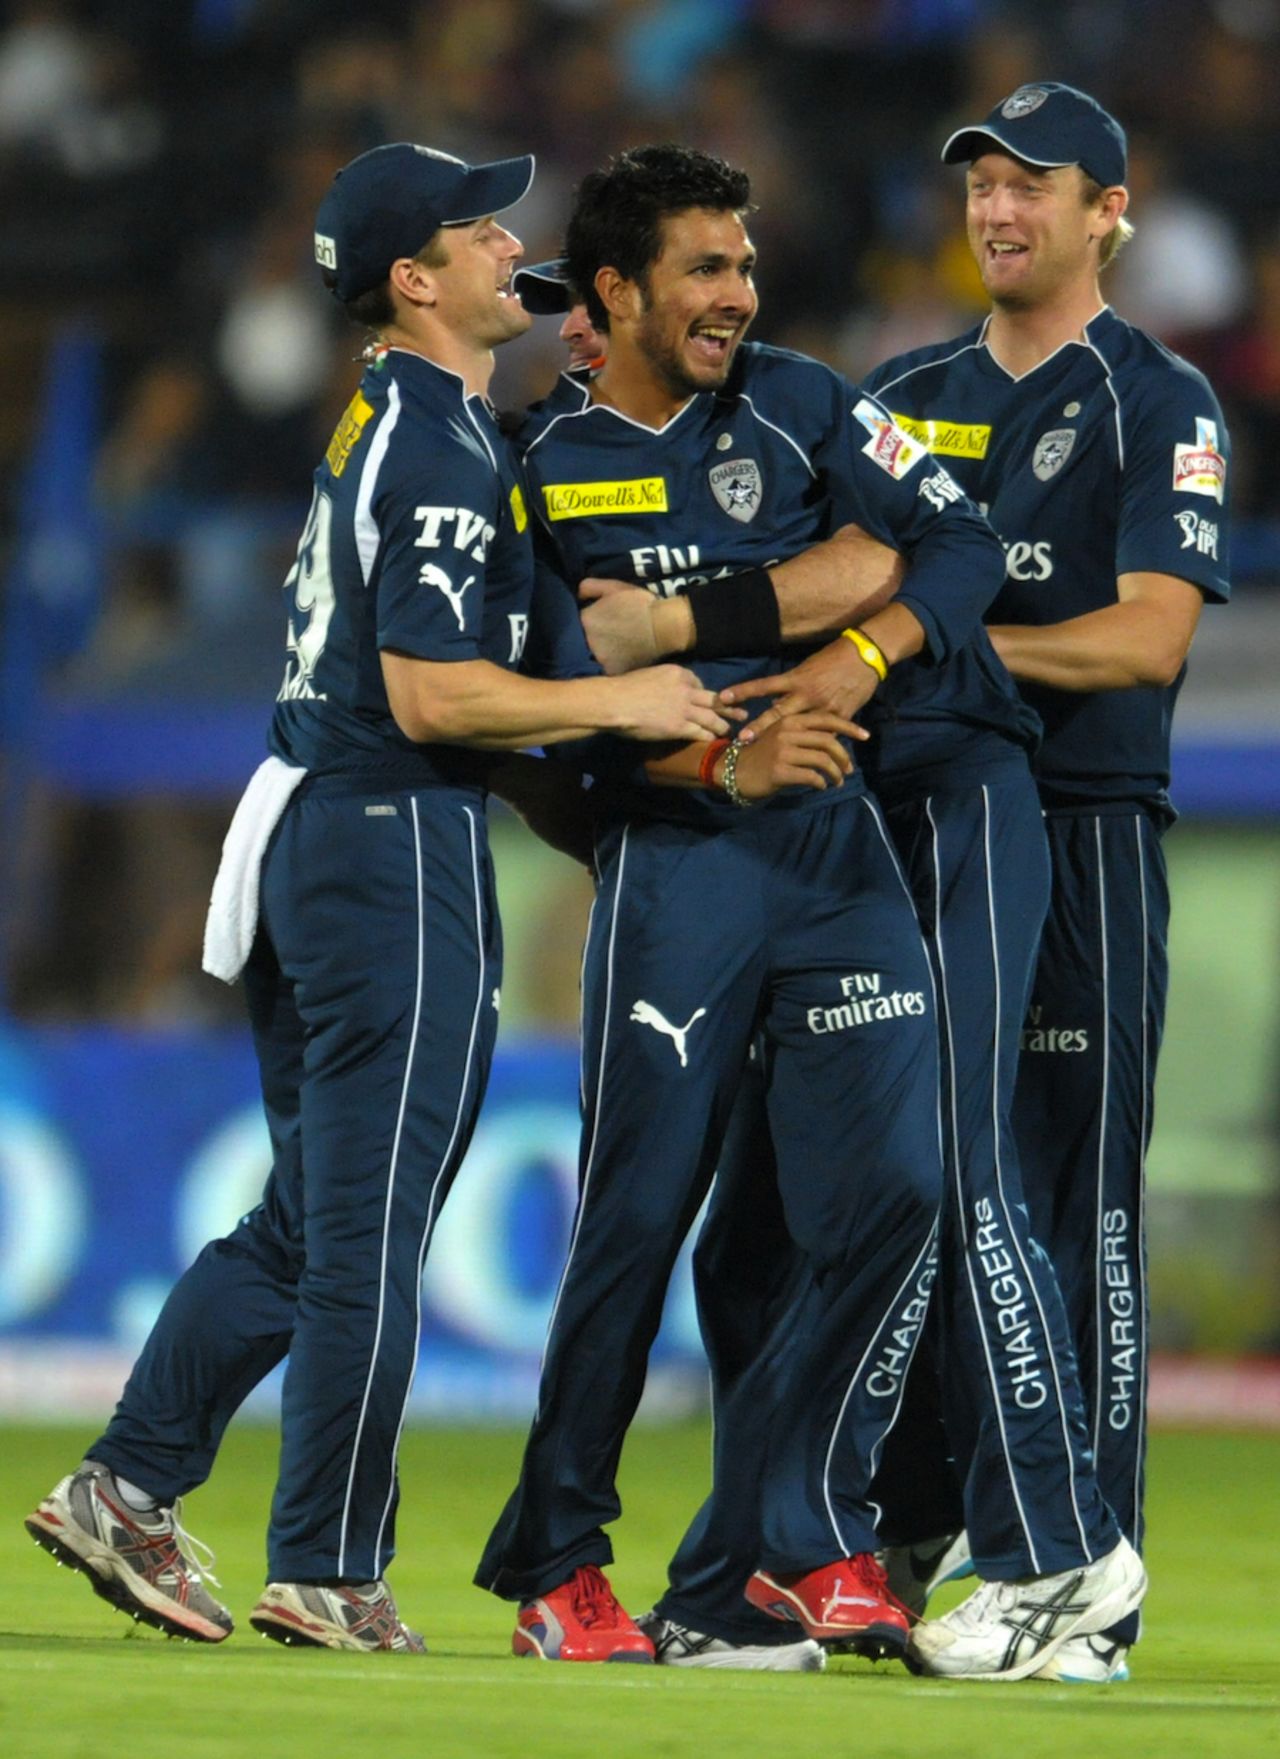 Ankit Sharma celebrates a wicket, Deccan Chargers v Chennai Super Kings, IPL 2012, Visakhapatnam, April 7, 2012